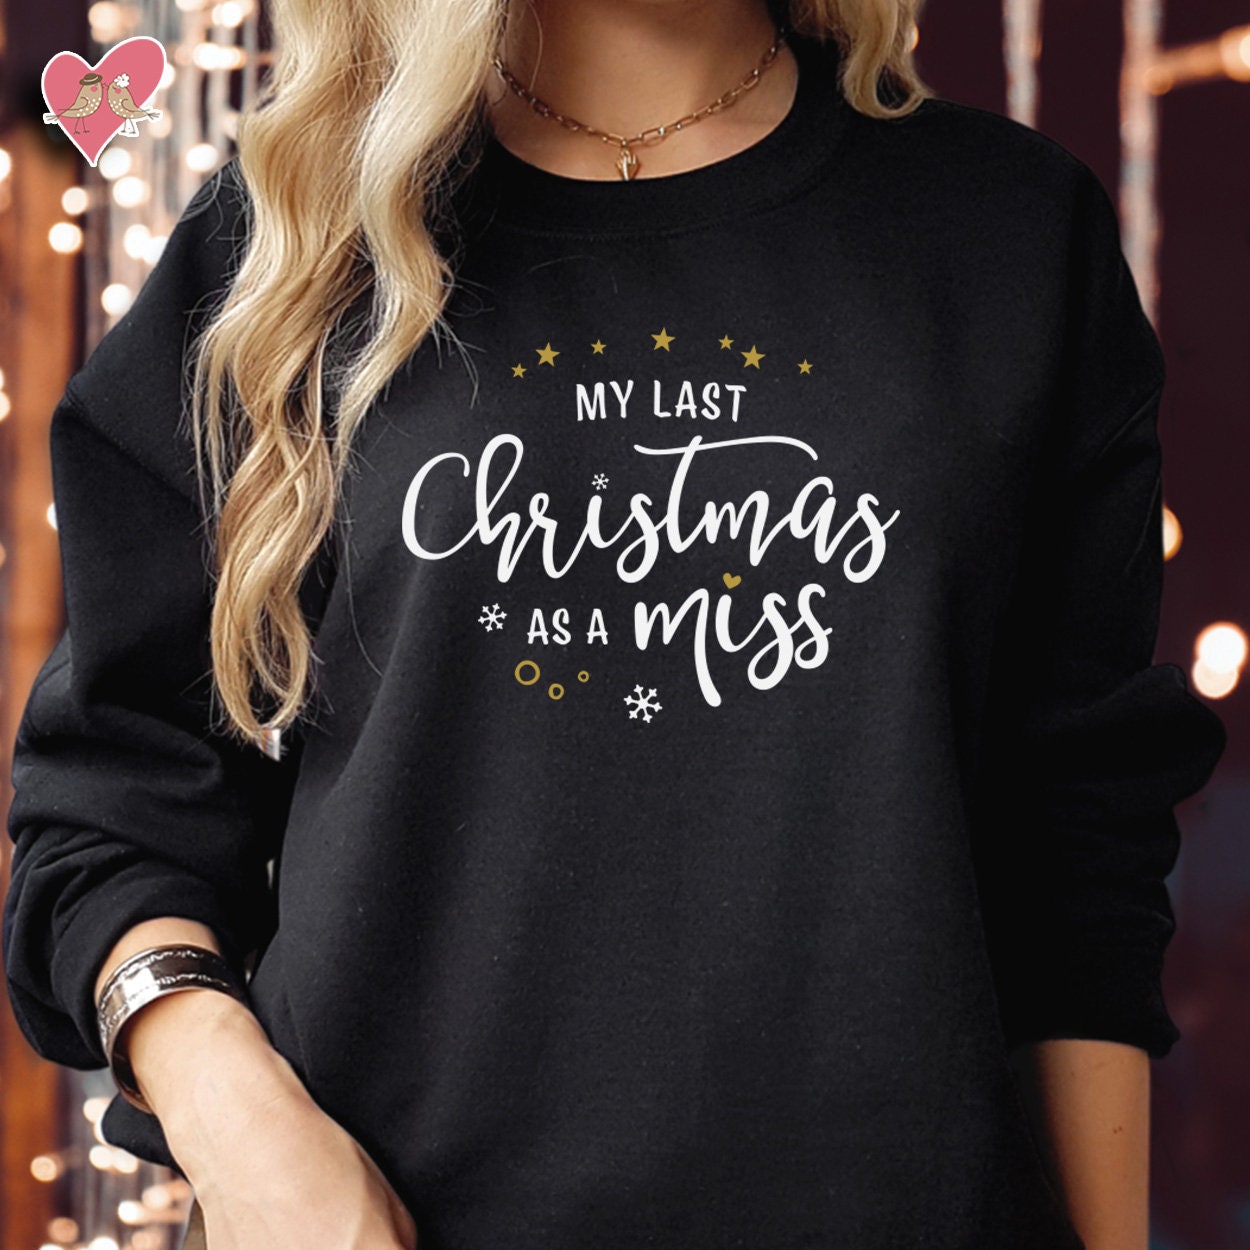 FchengtaiS Christmas Sweatshirts for Women Funny Santa Claus